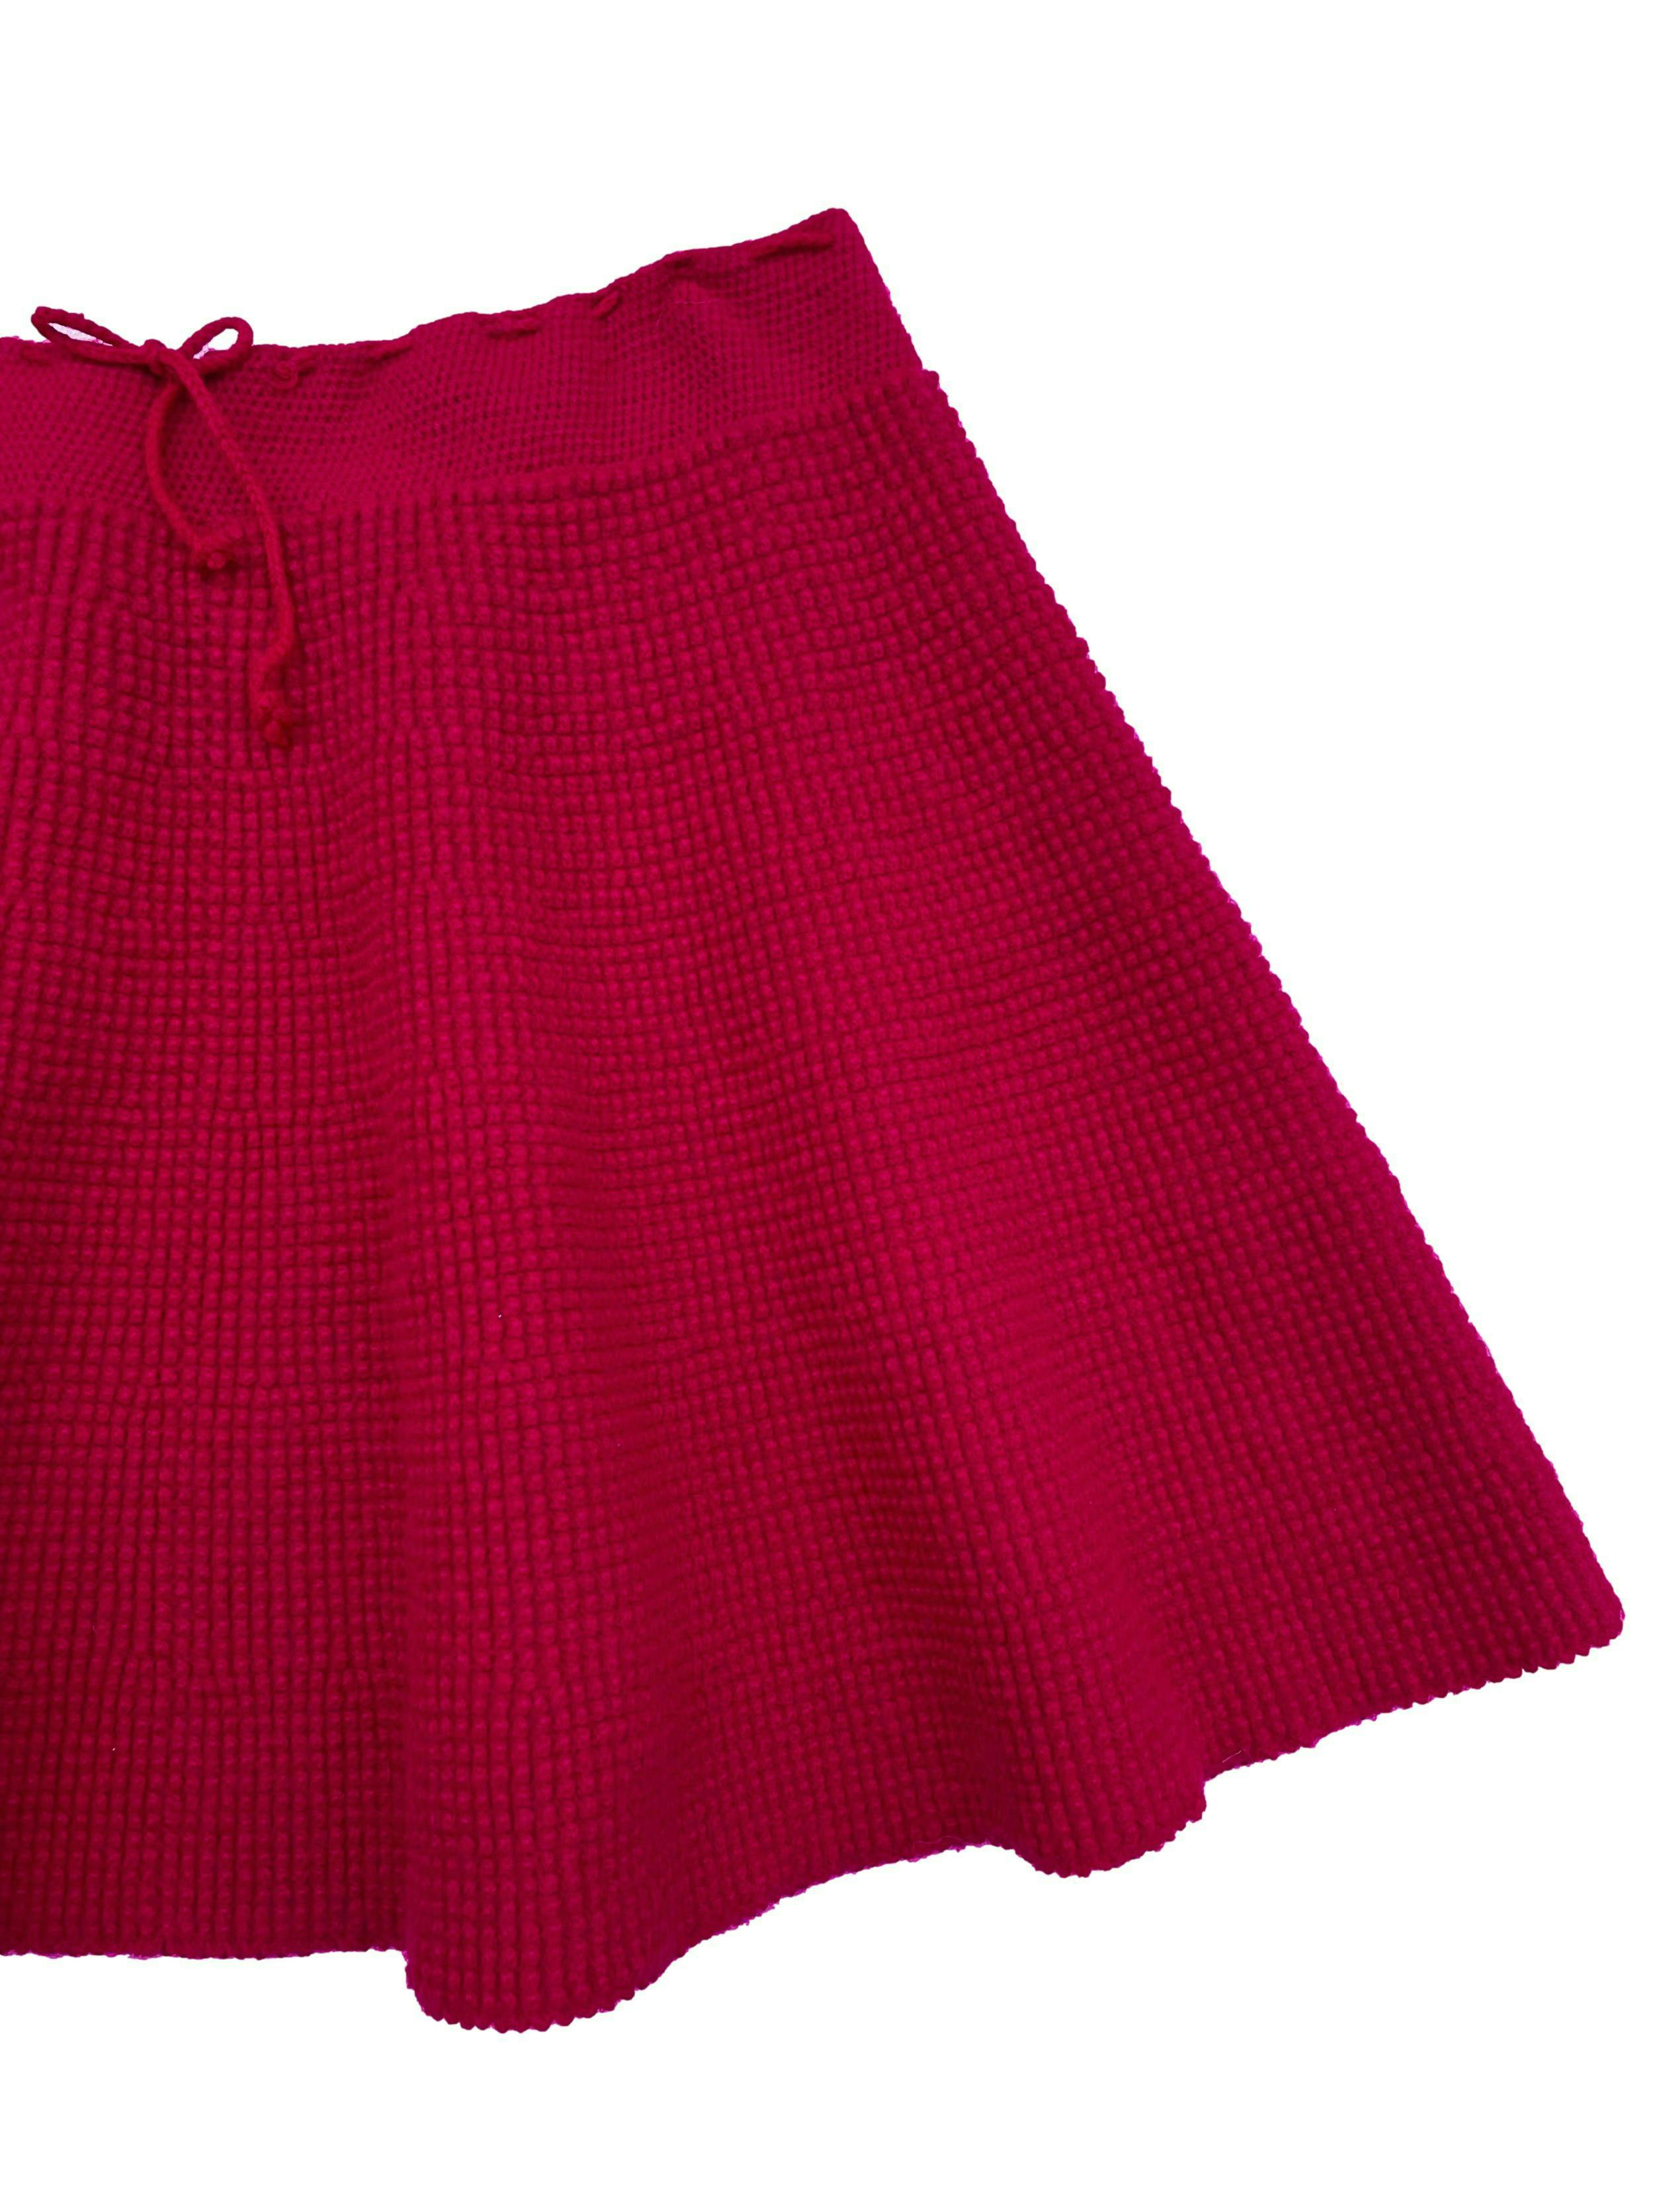 Falda de lana compacta con textura, corte campana, cintura regulable. Largo 49cm